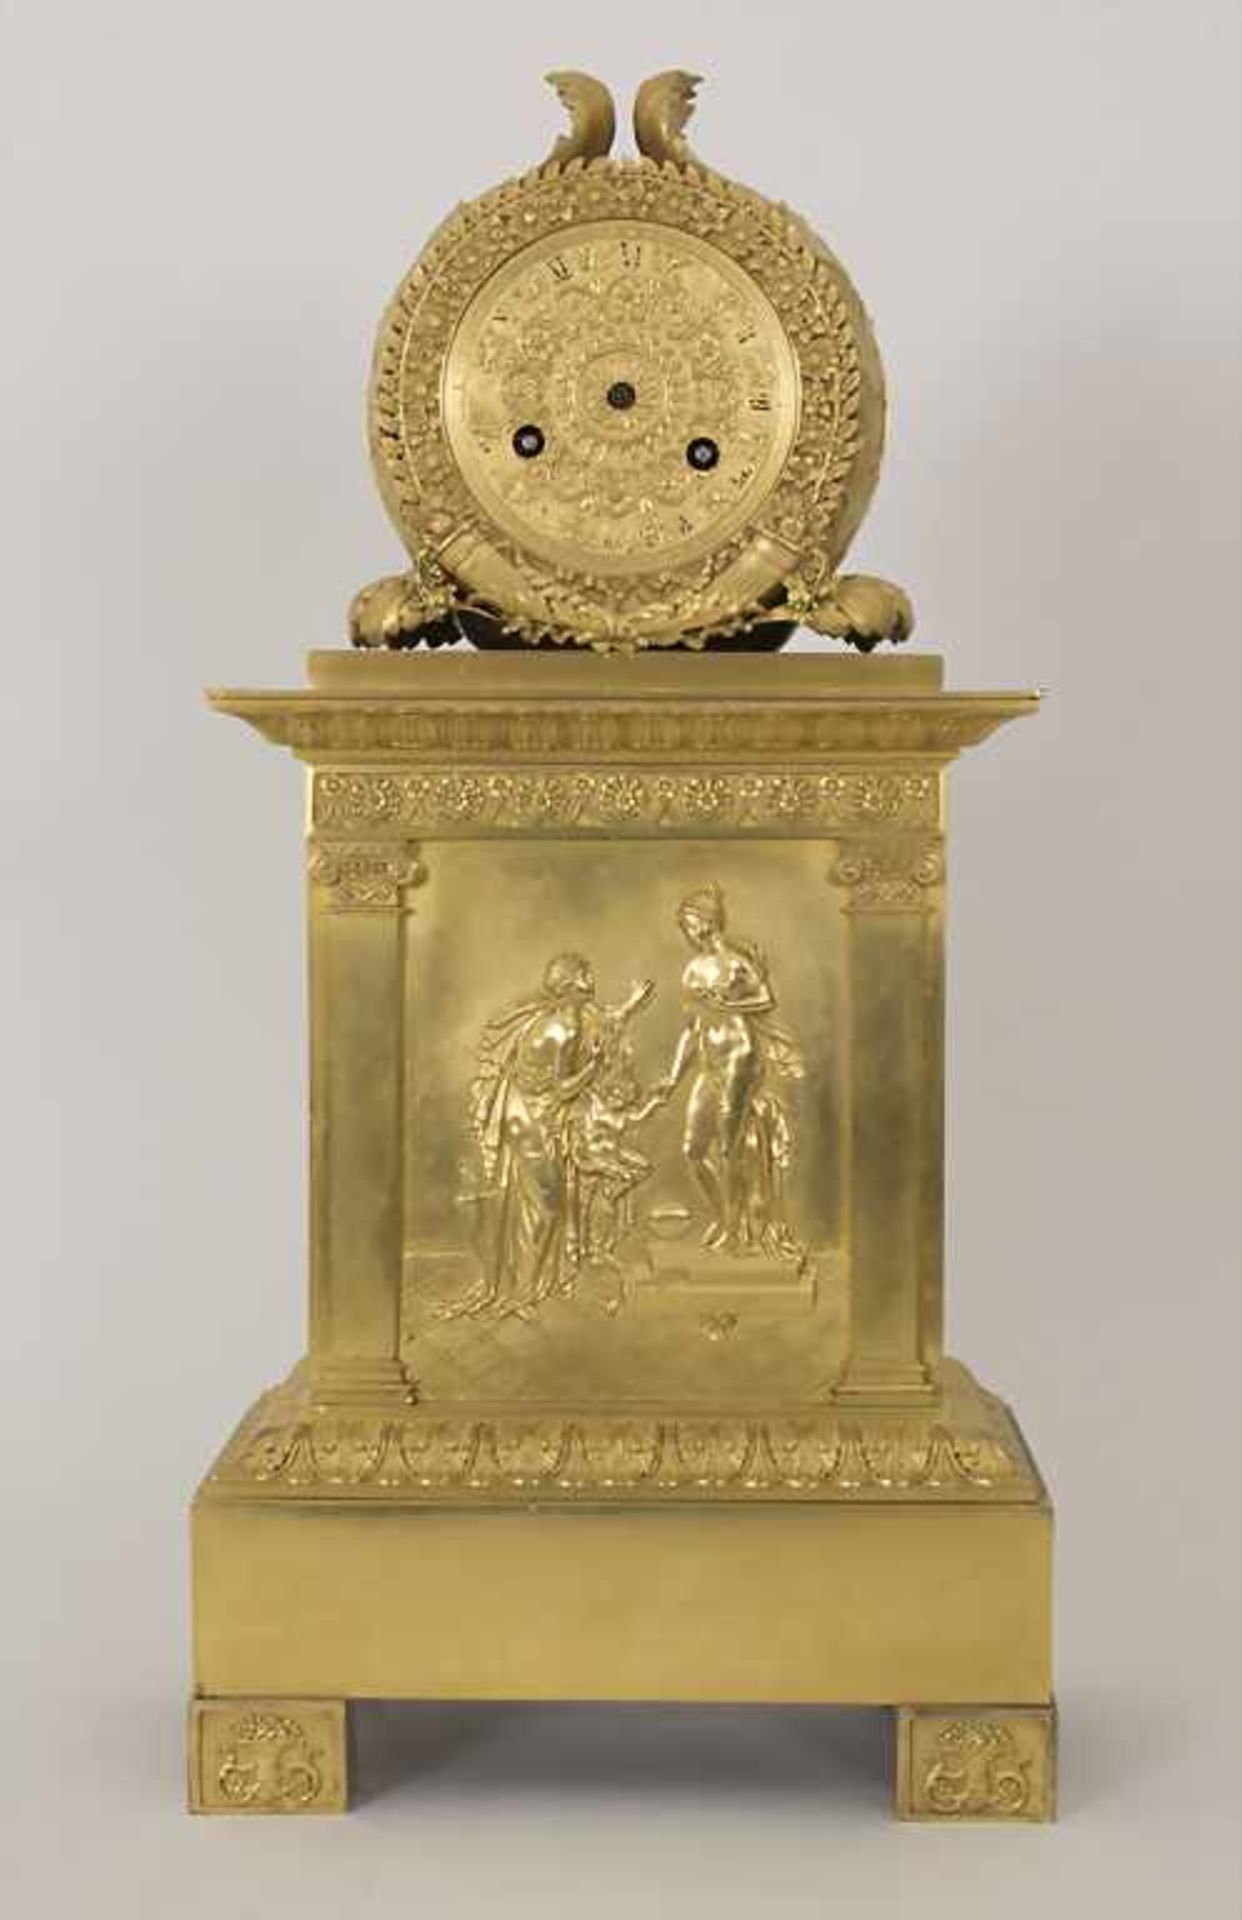 Empire Pendule 'Die Künste' / An Empire clock 'The fine arts', Paris, um 1800 - Image 3 of 11